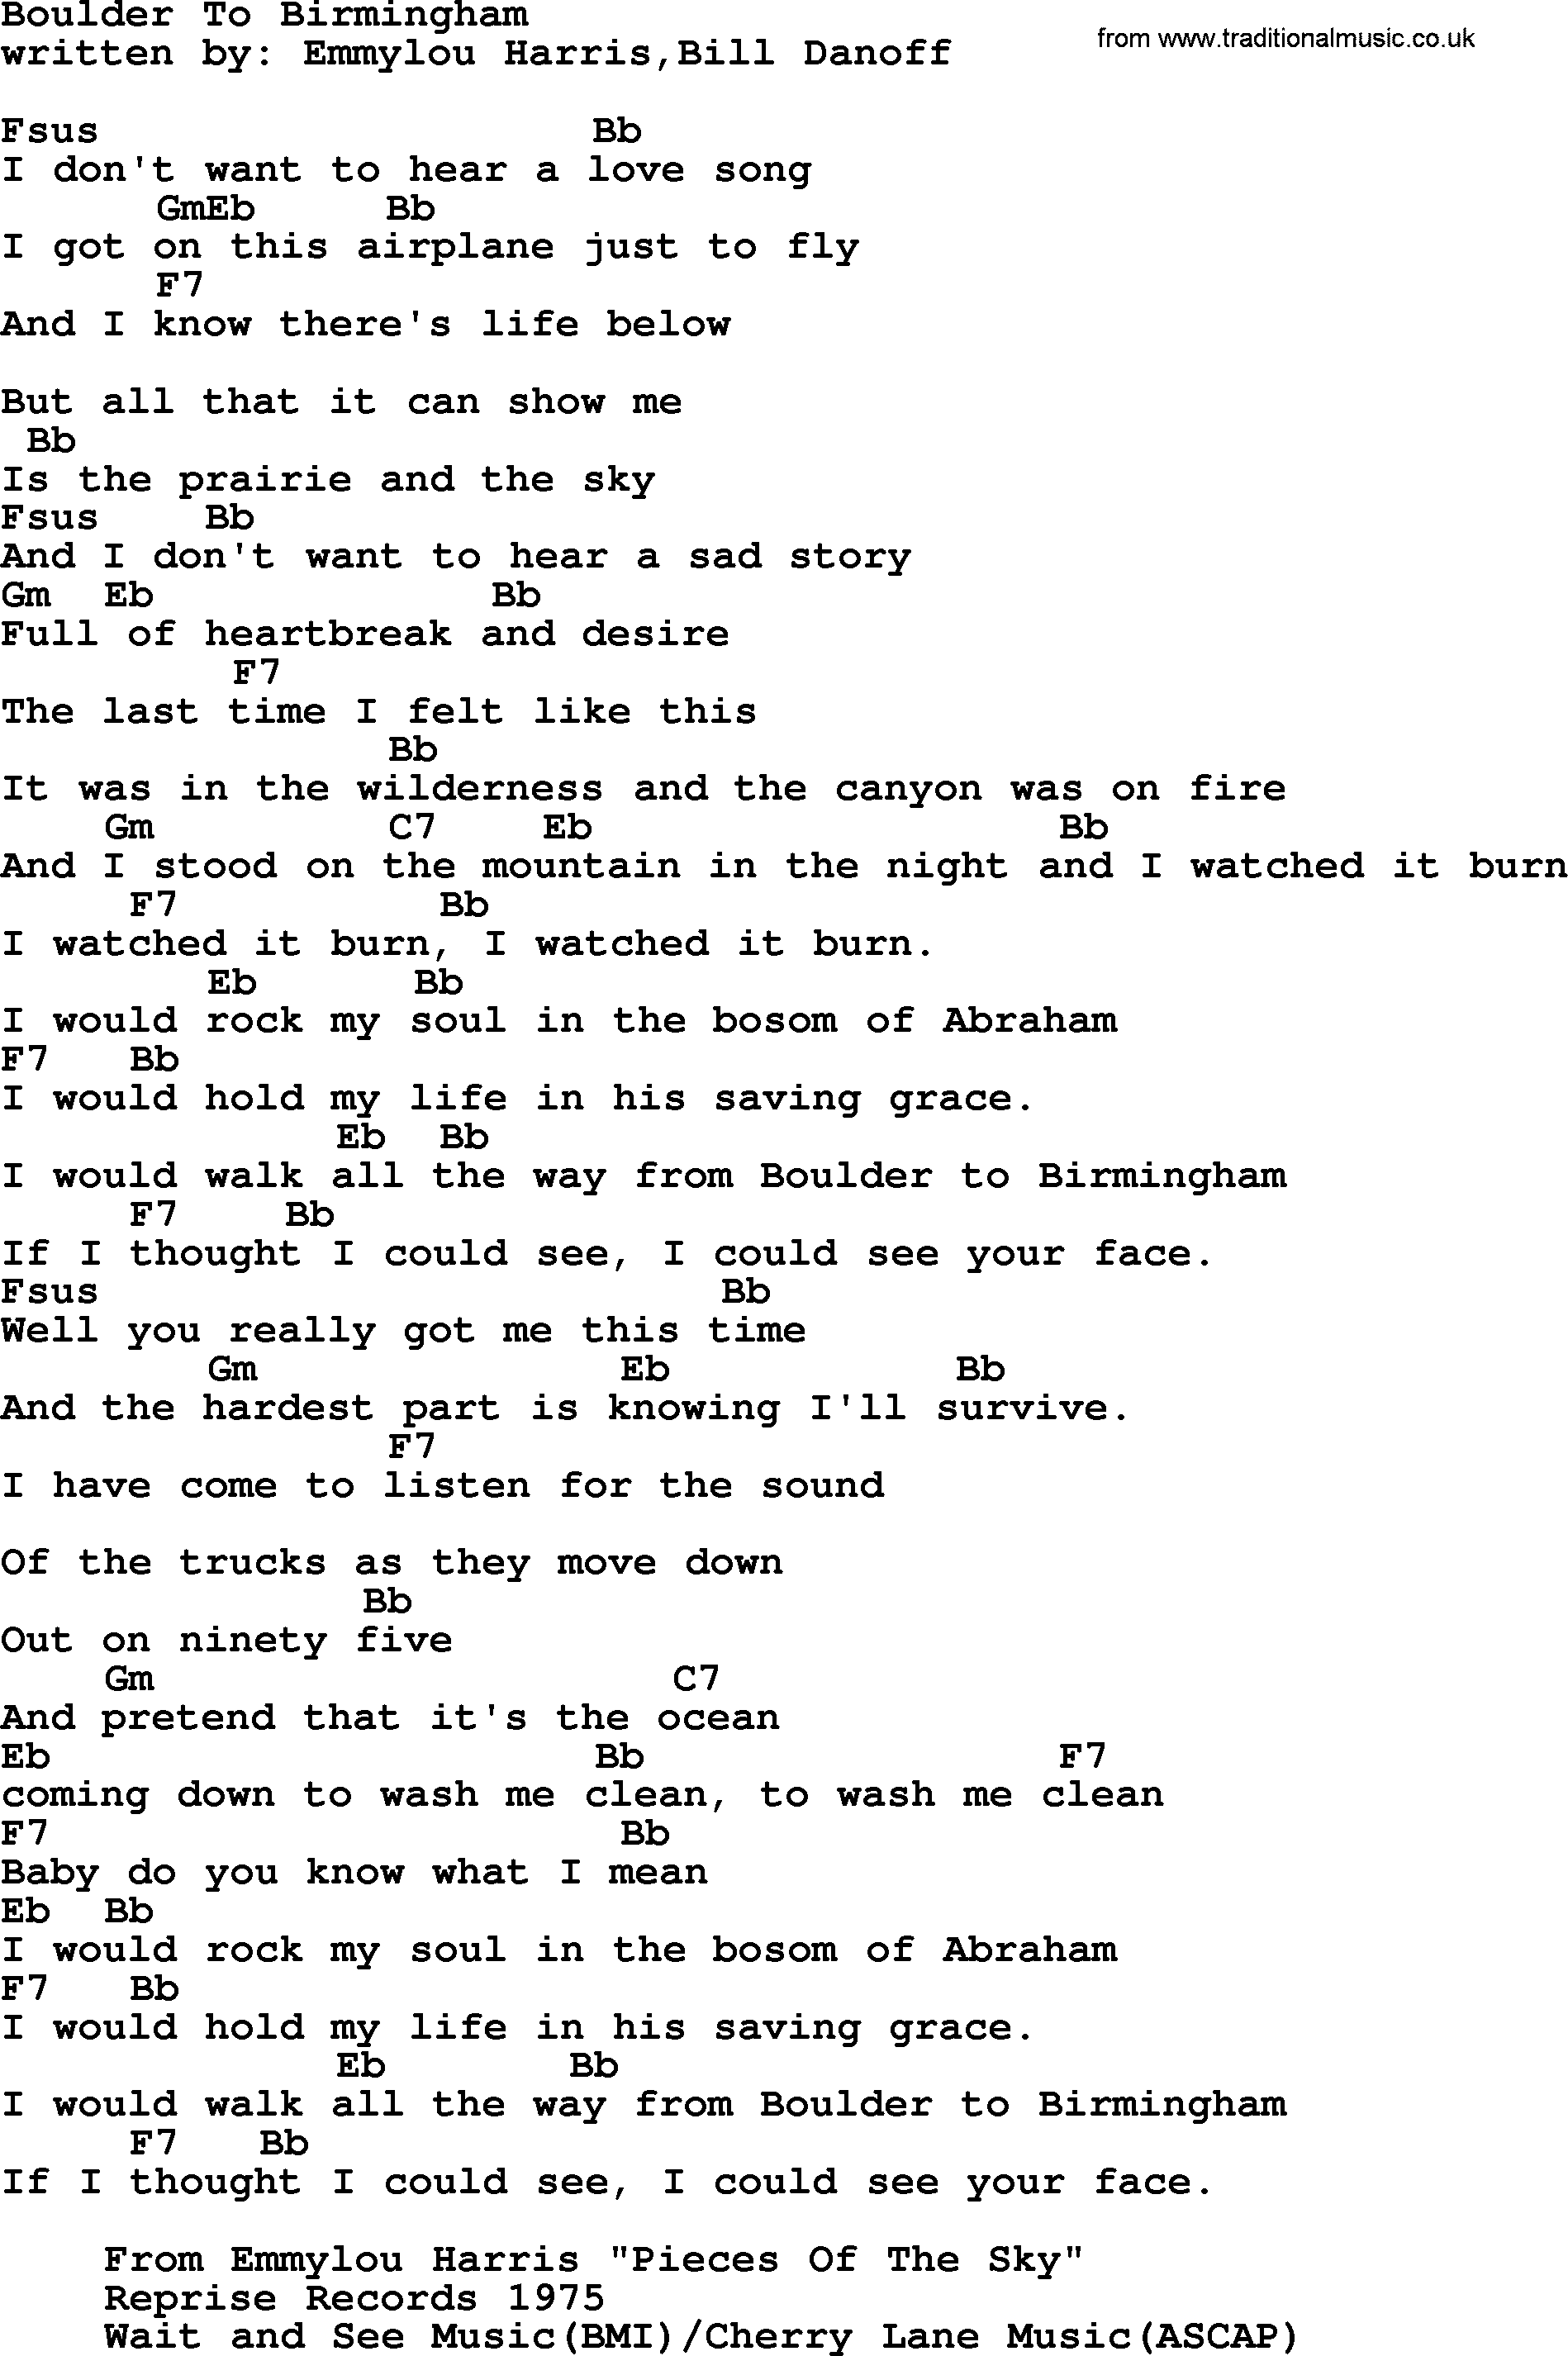 Emmylou Harris song: Boulder To Birmingham lyrics and chords